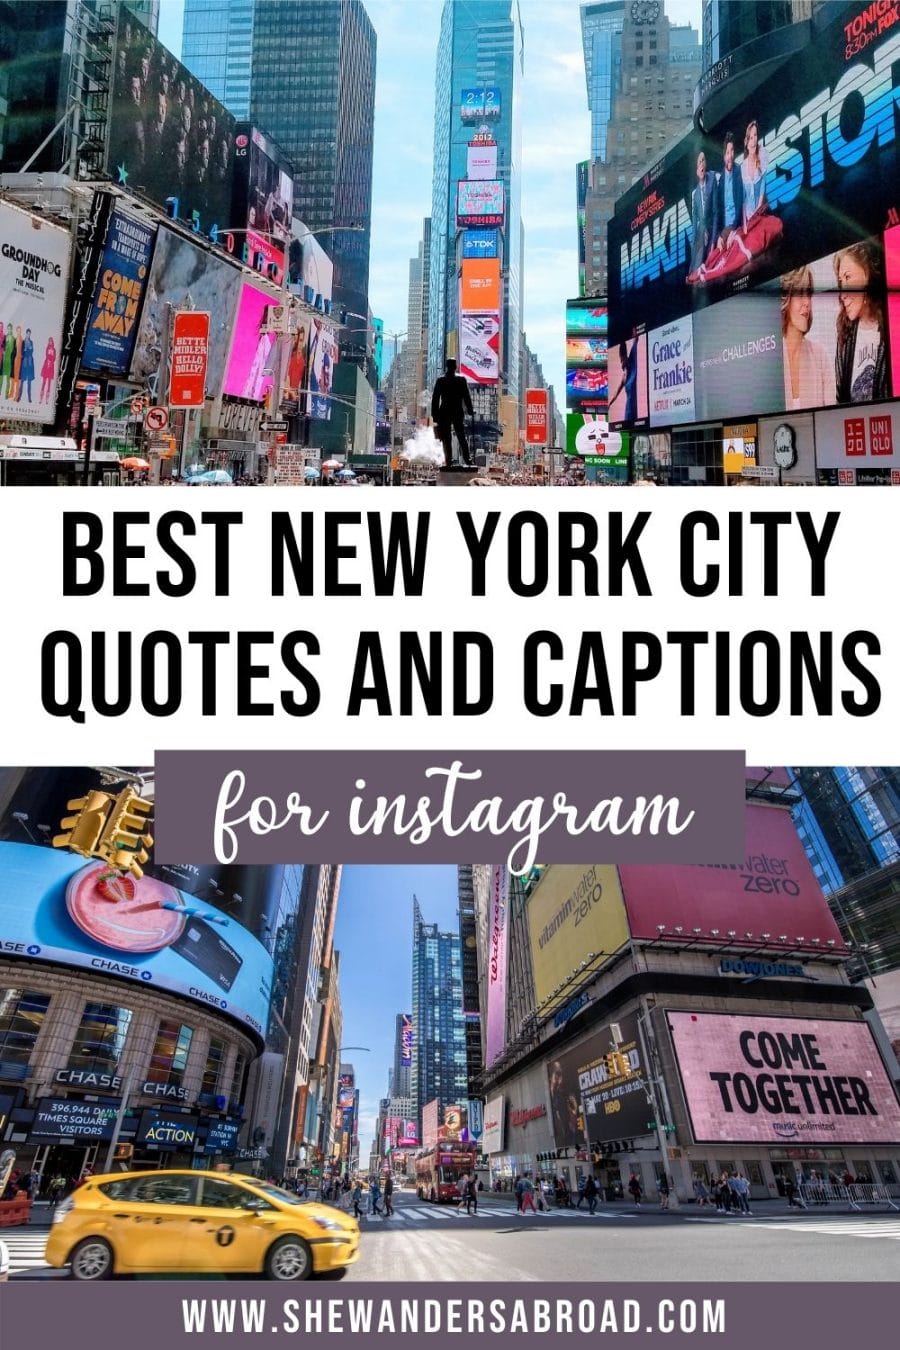 New York Captions for Instagram